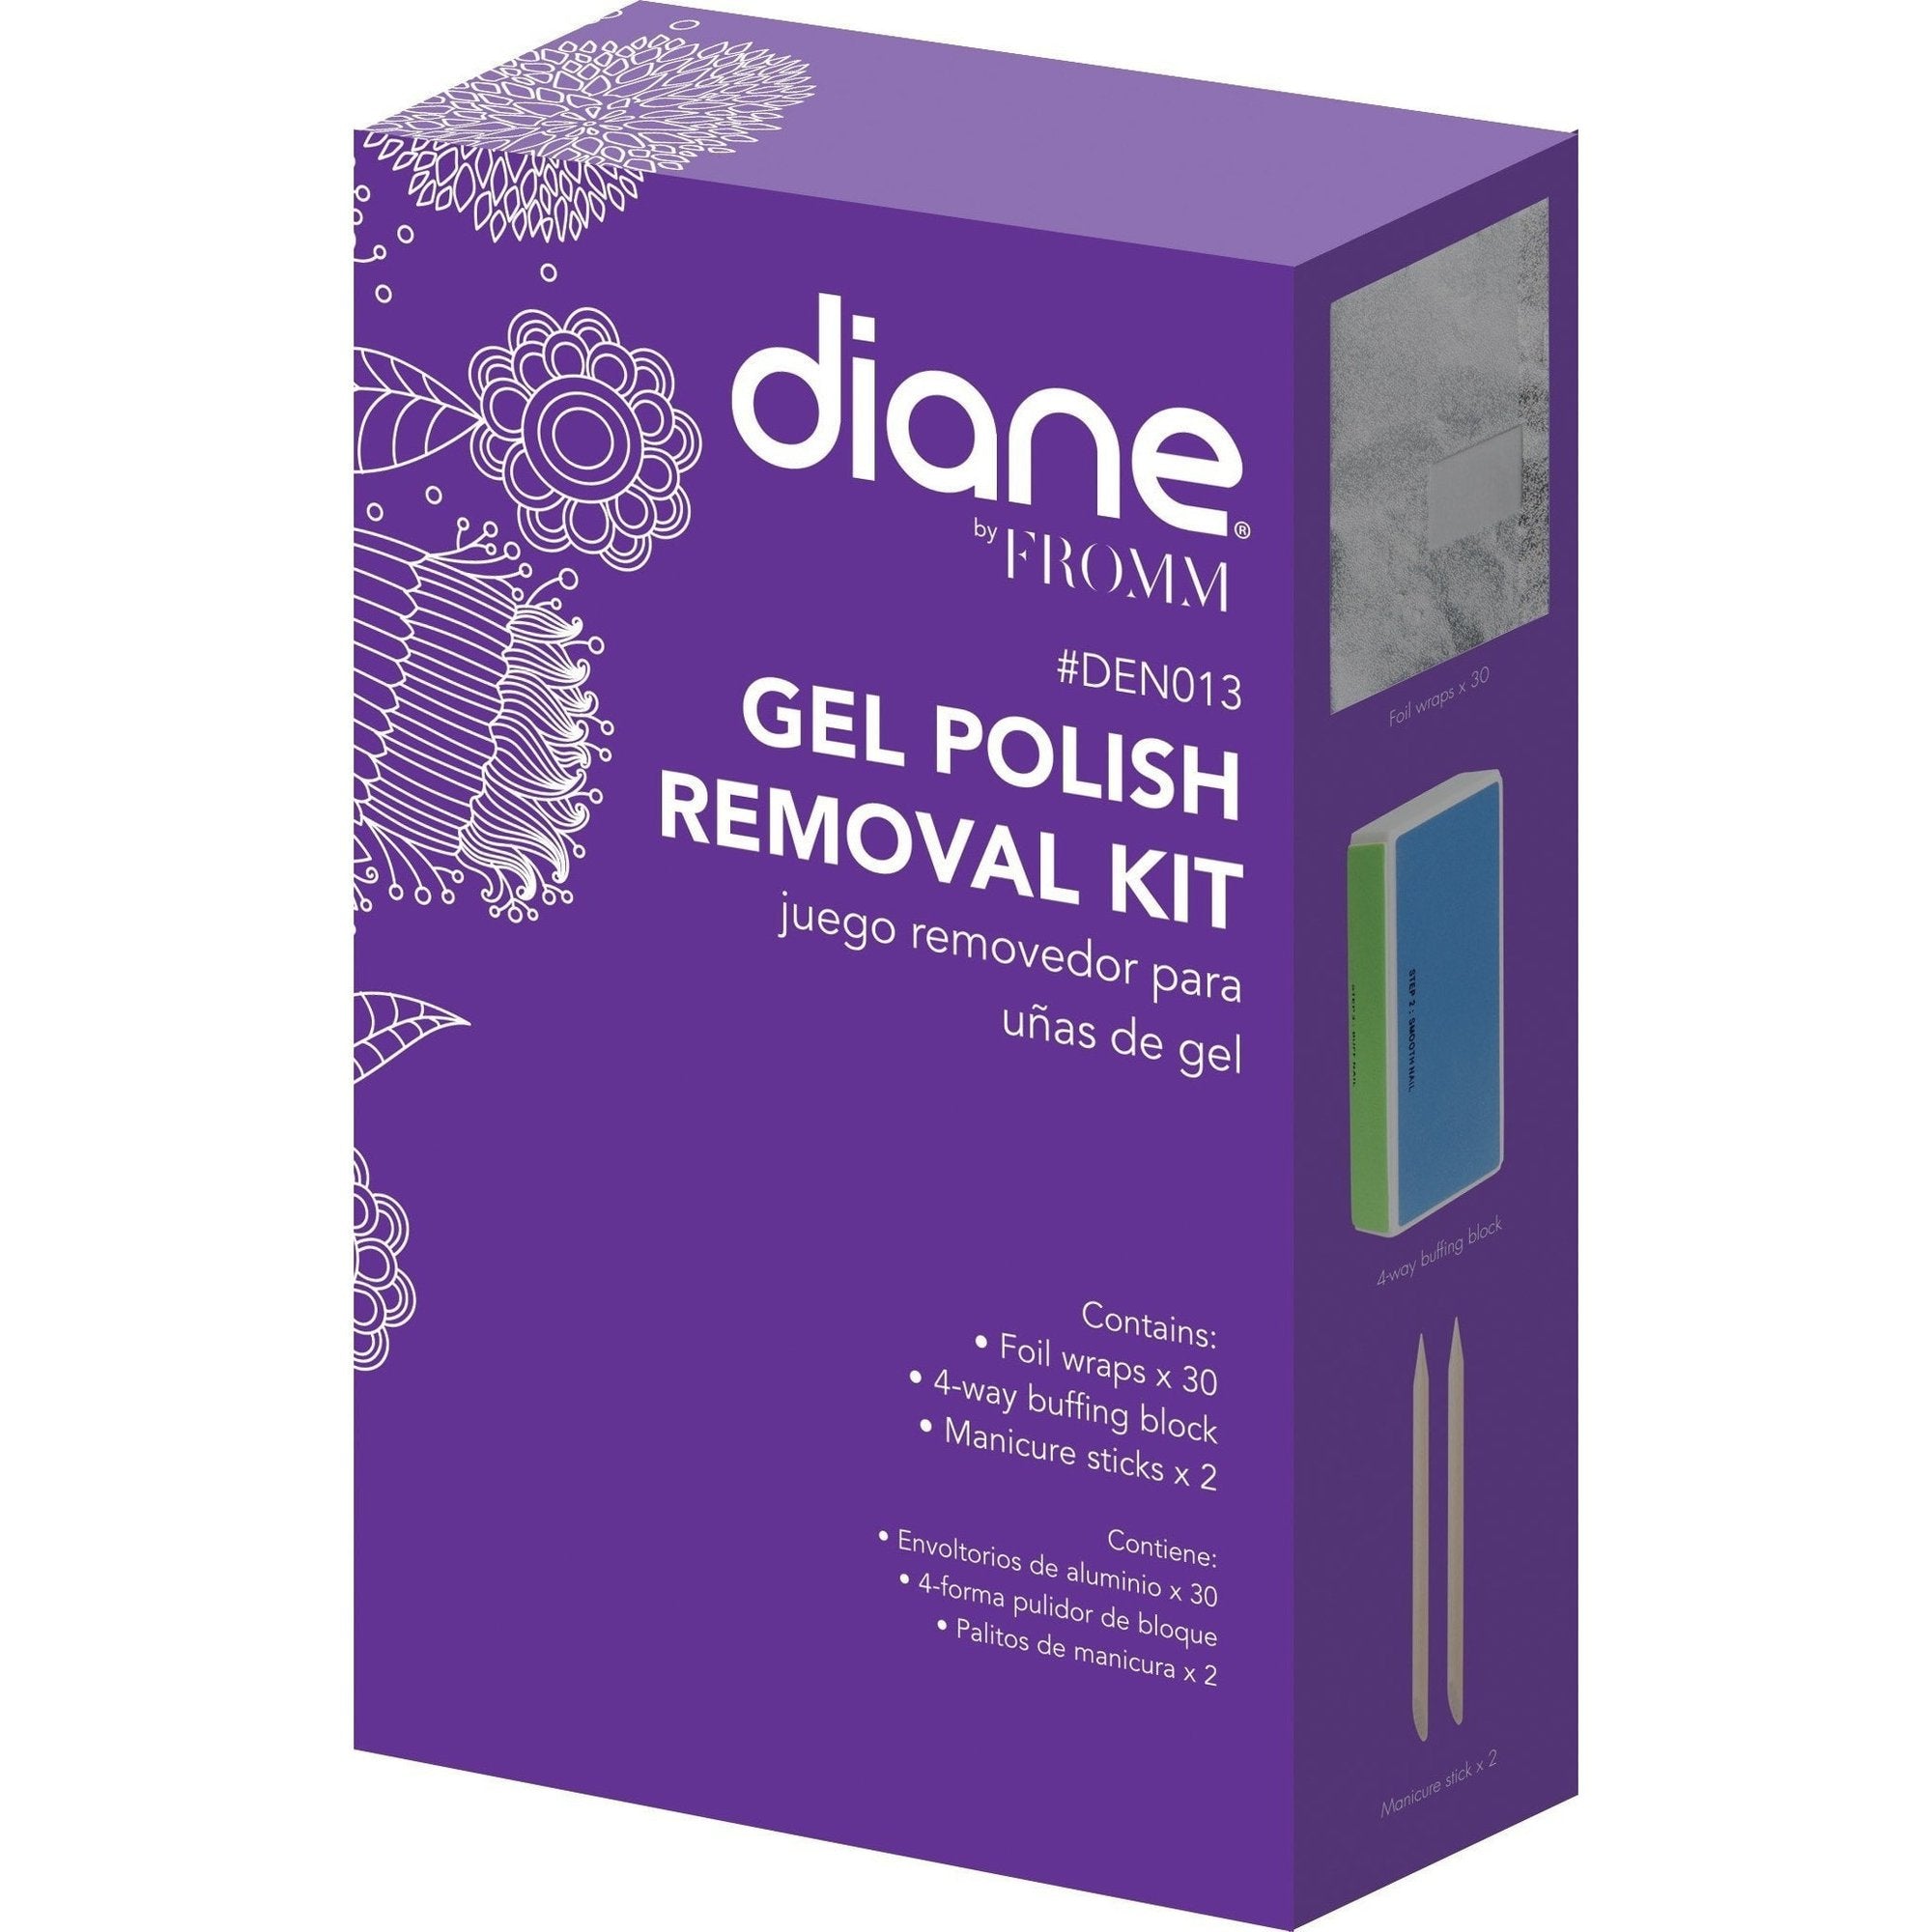 Diane Gel Polish Removal Kit